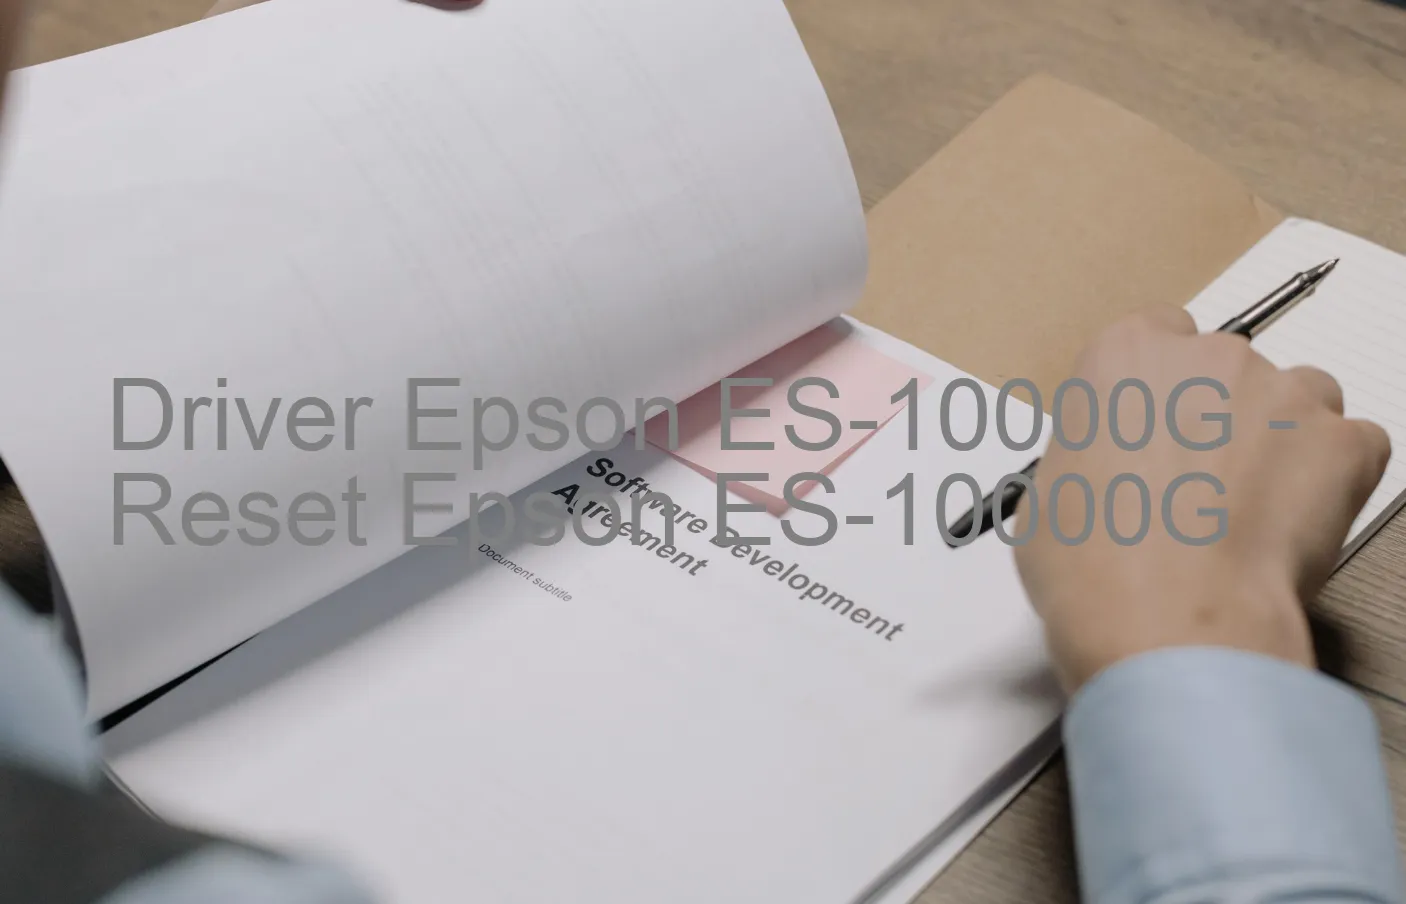 Epson ES-10000Gのドライバー、Epson ES-10000Gのリセットソフトウェア